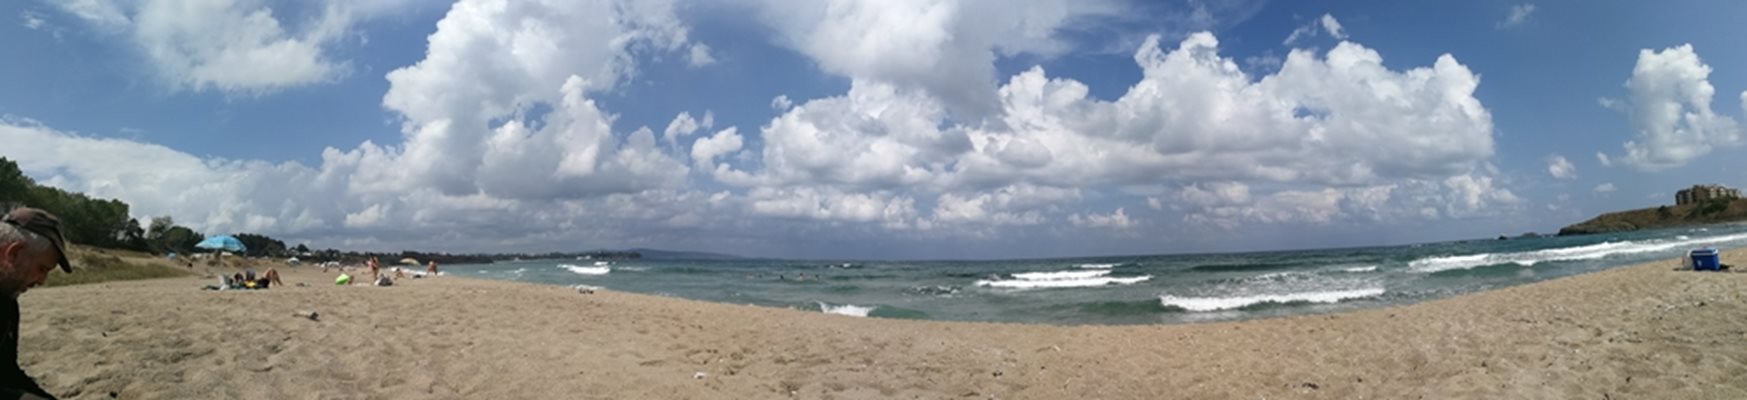 Култовият плаж Корал